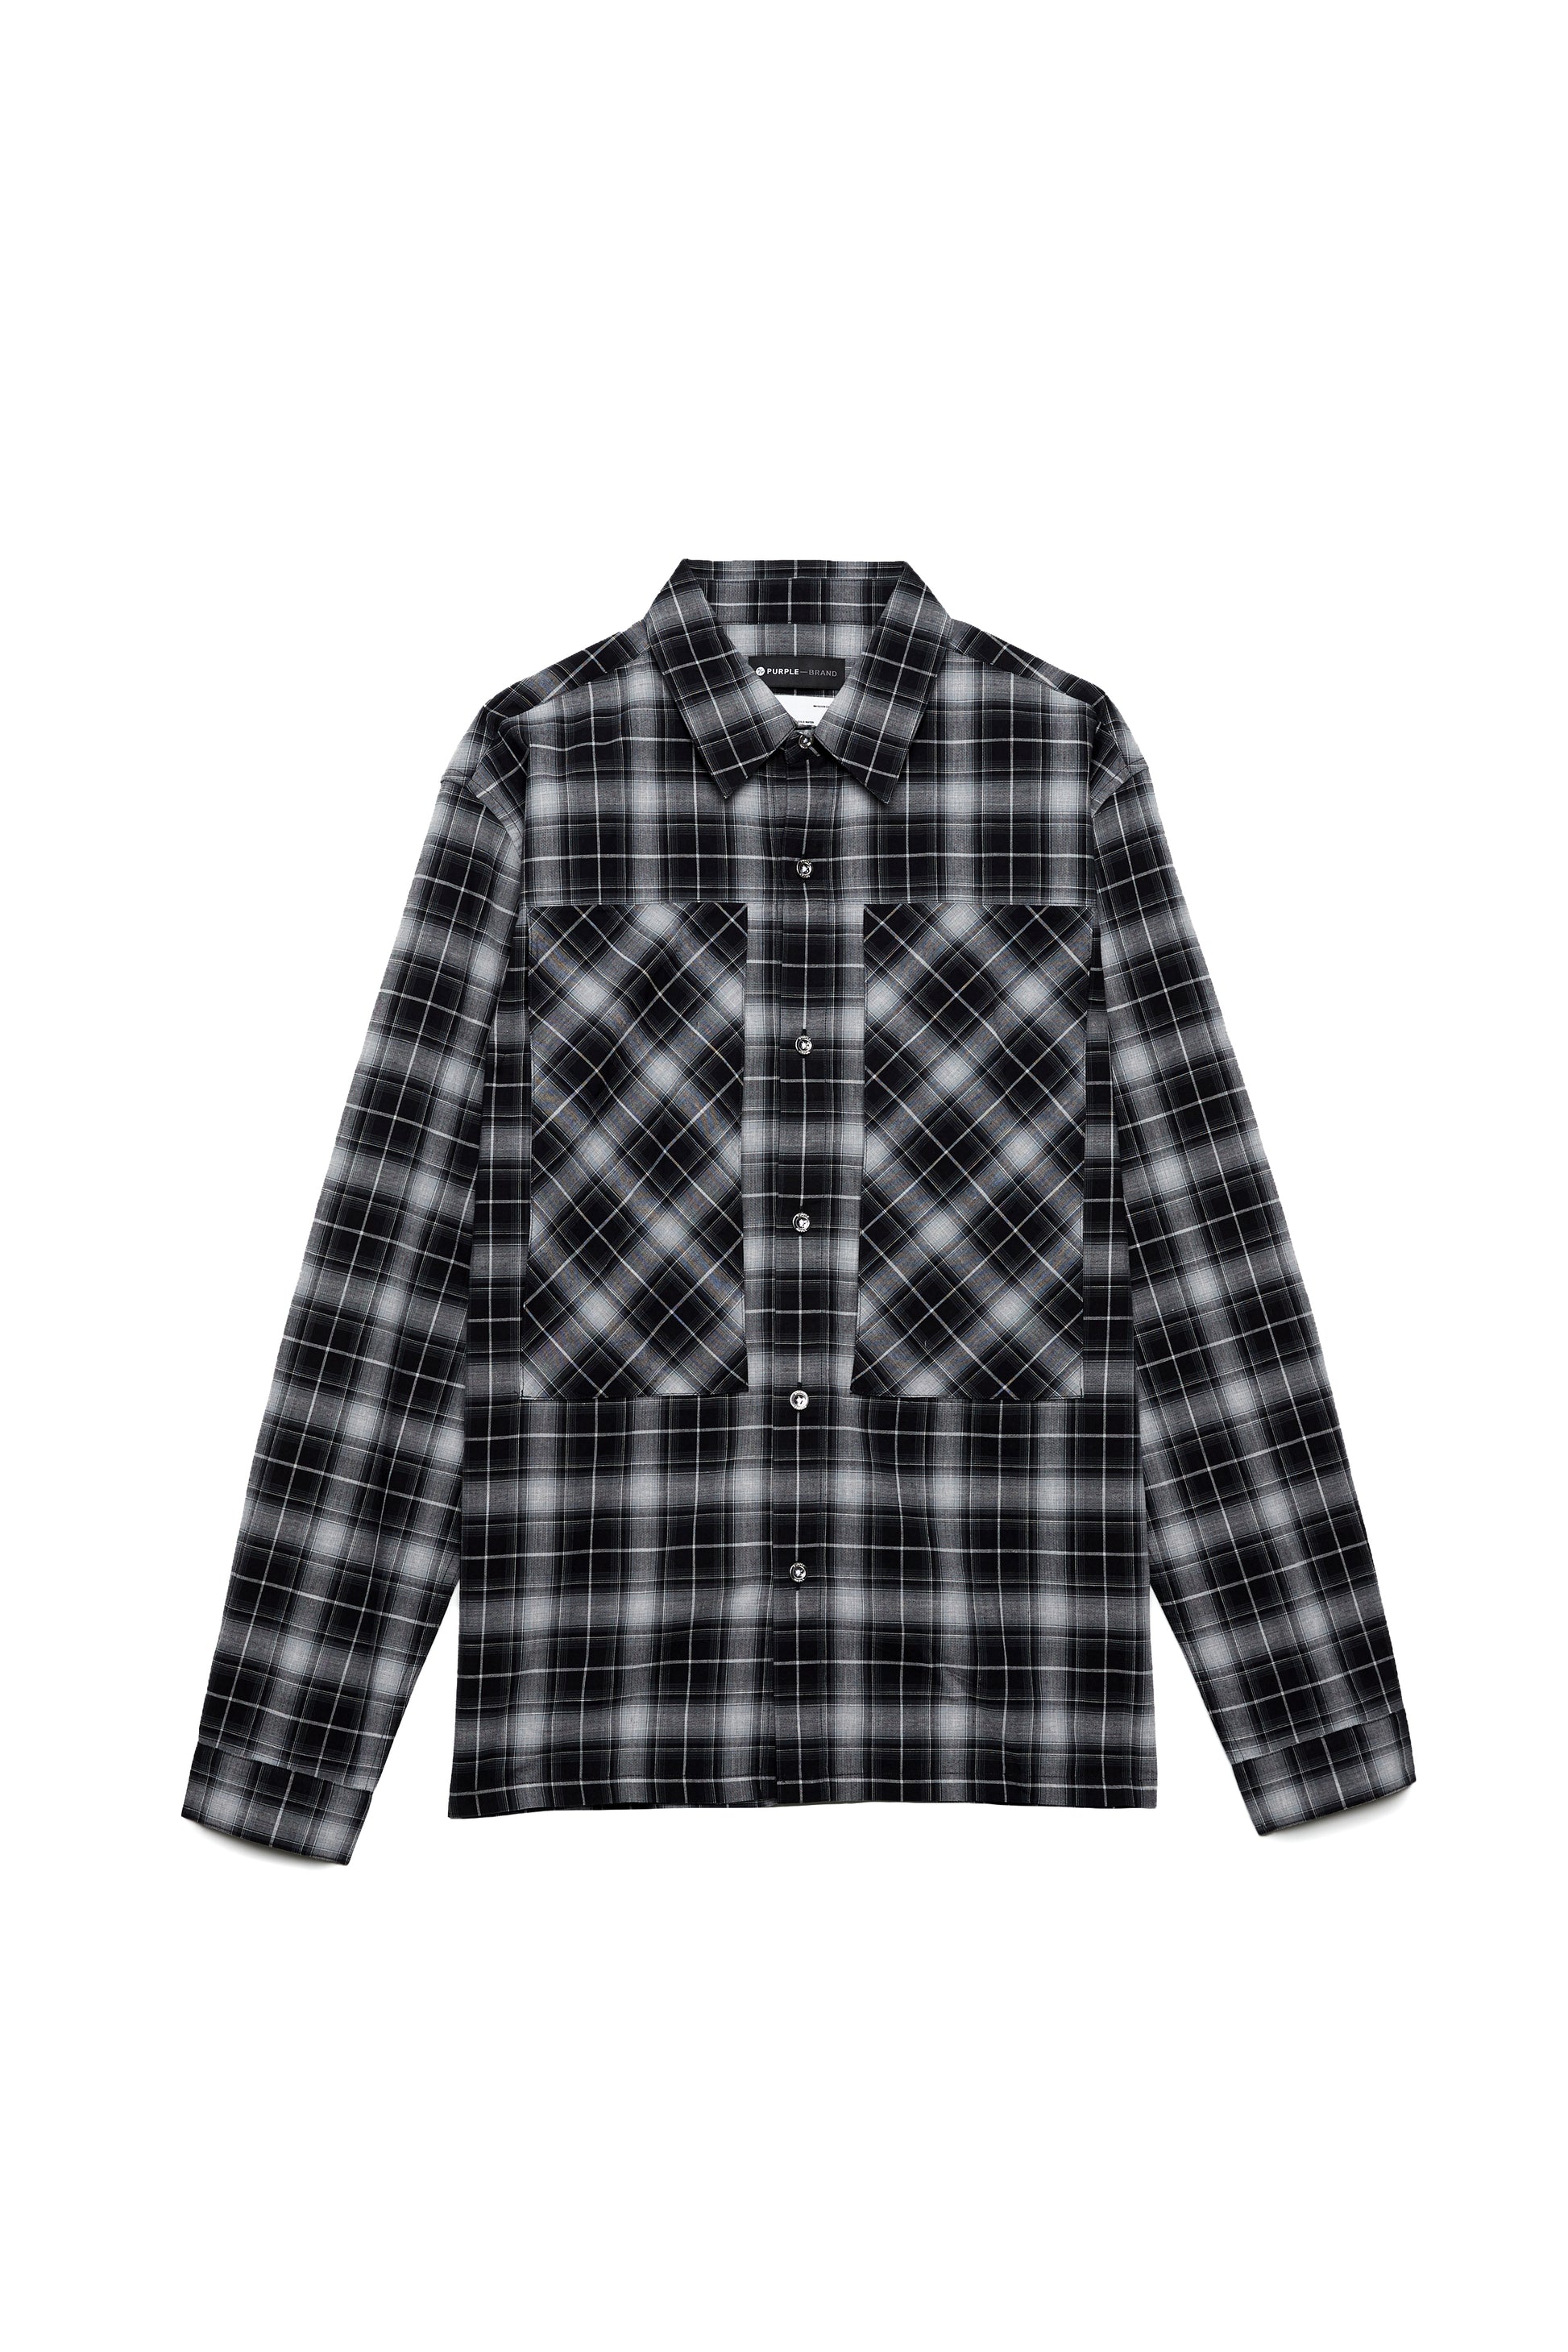 PURPLE BRAND - Men's Long Sleeve Shirt - Style No. P304 - Bias Chest Pocket Shirt Black - Front